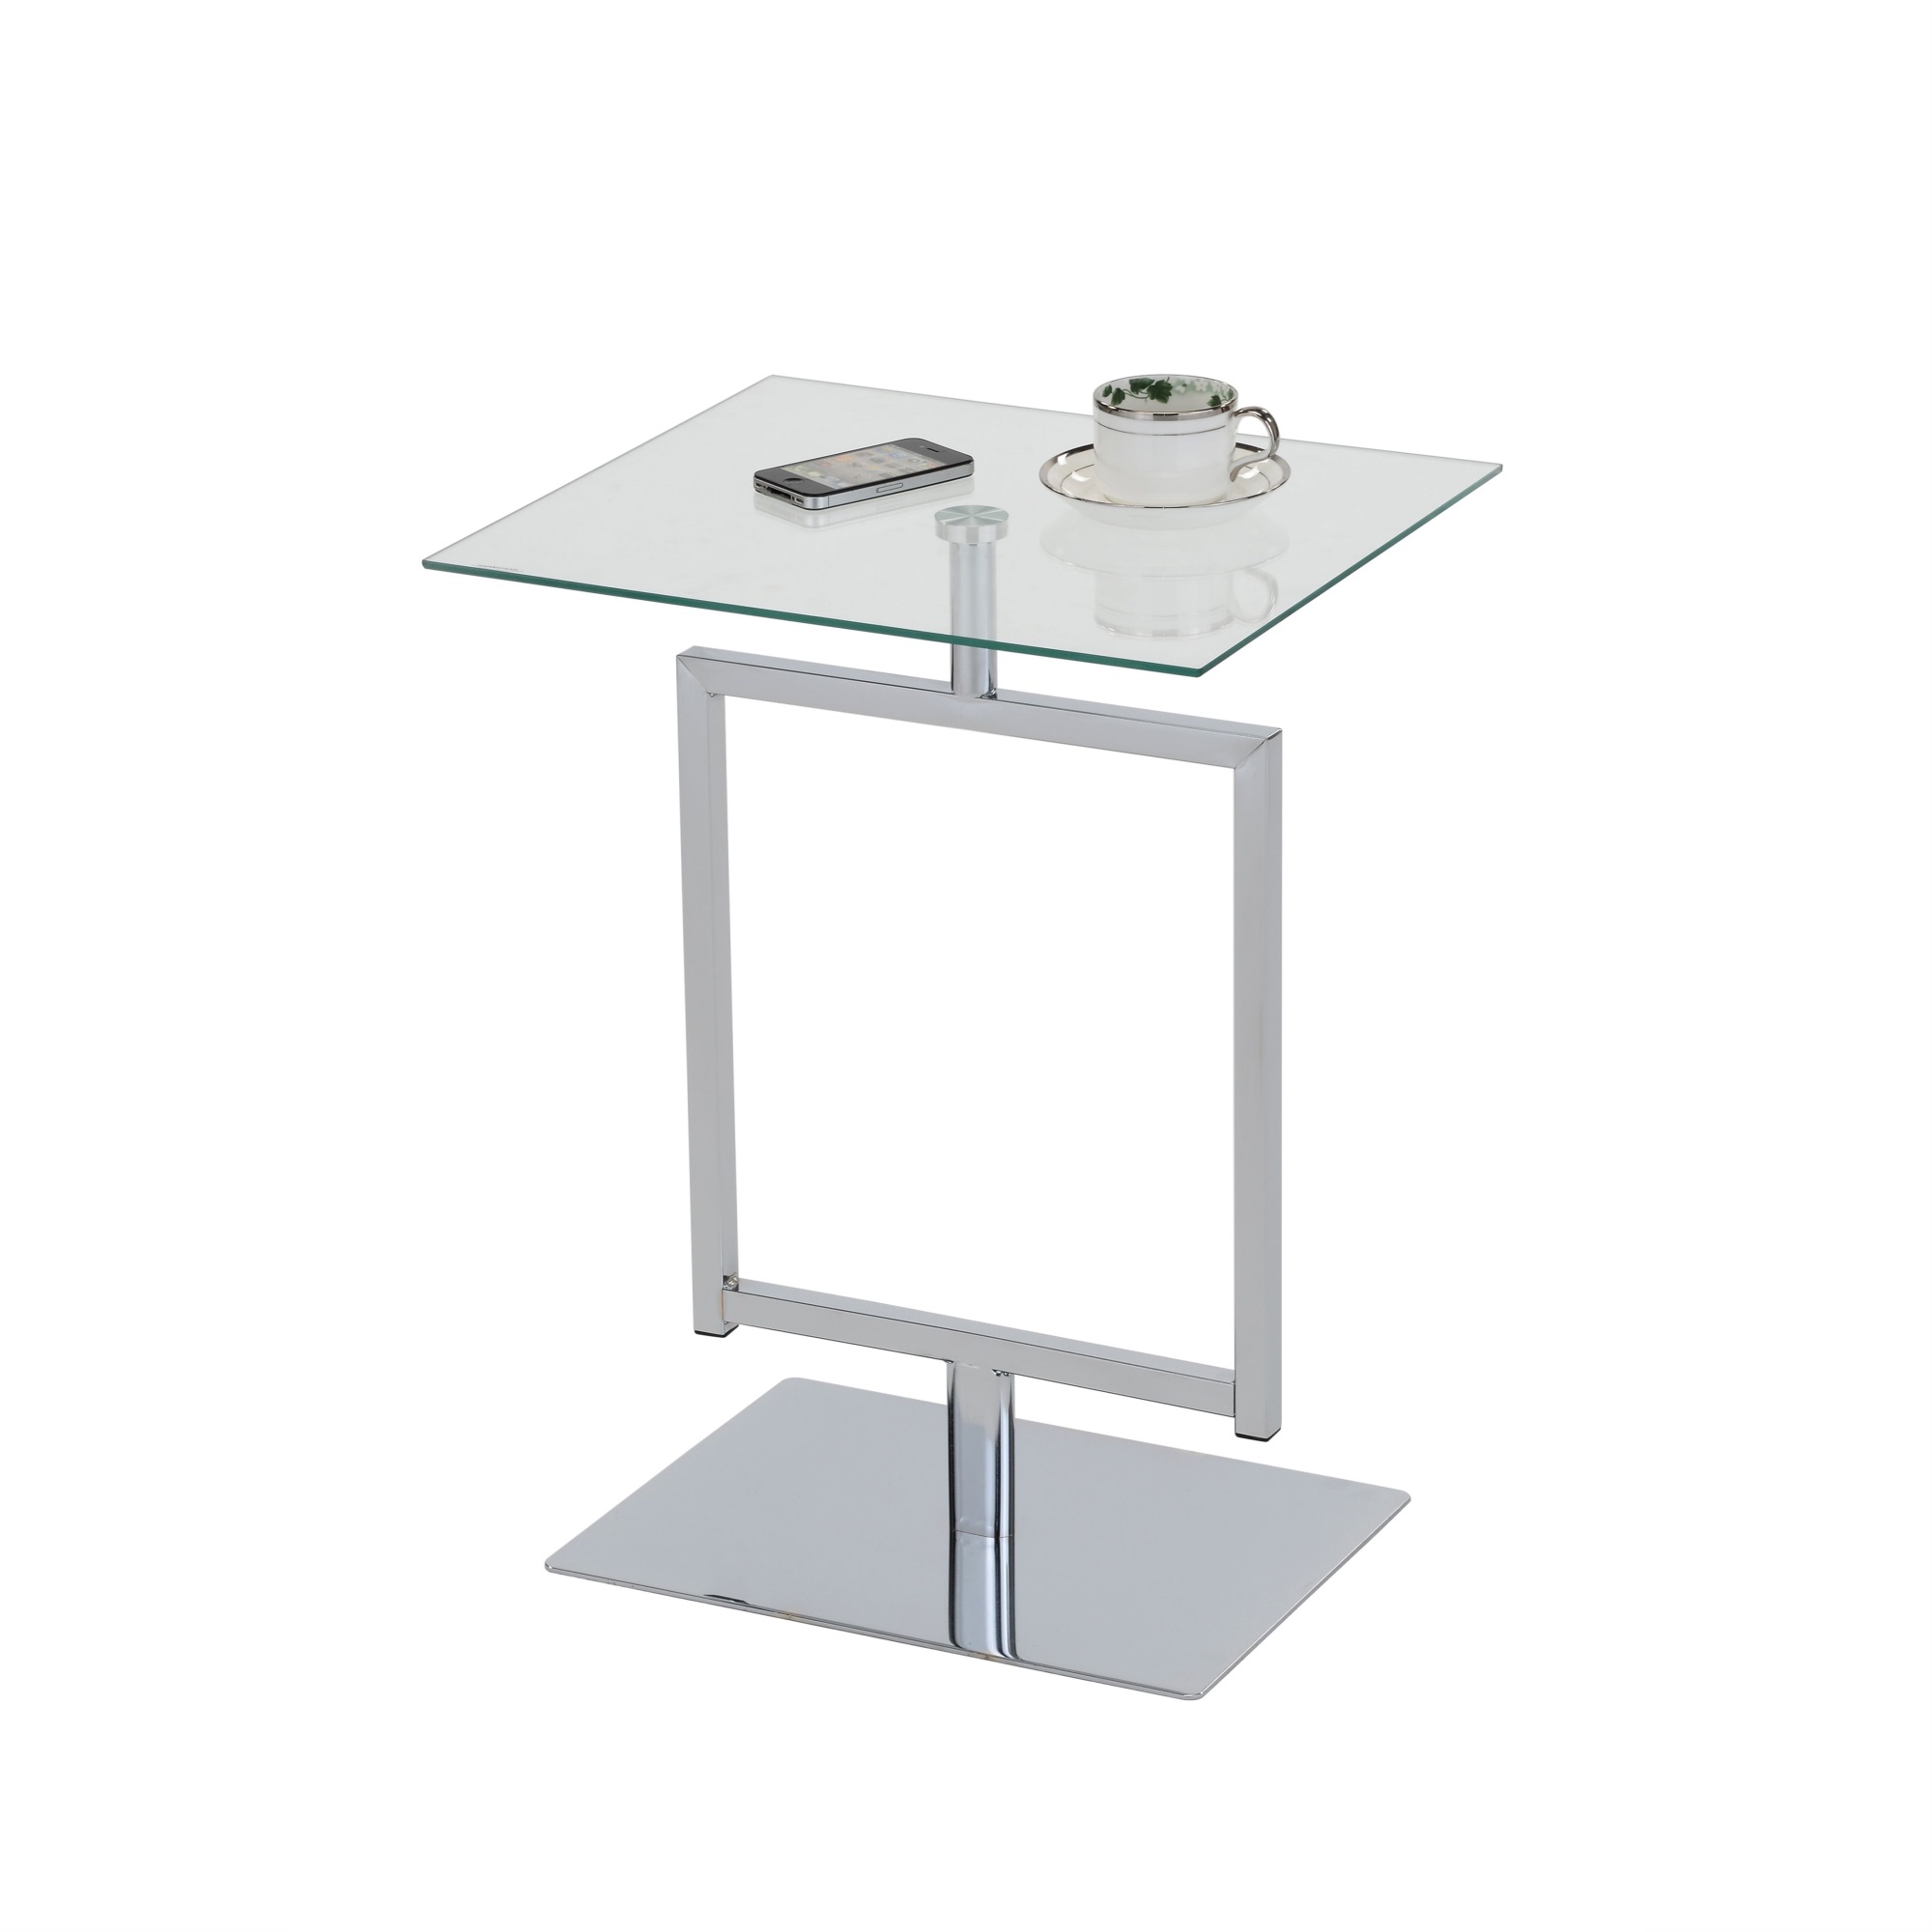 Pilaster Designs Doolins Modern Accent Side End Table, Chrome Metal Frame & Tempered Glass Top